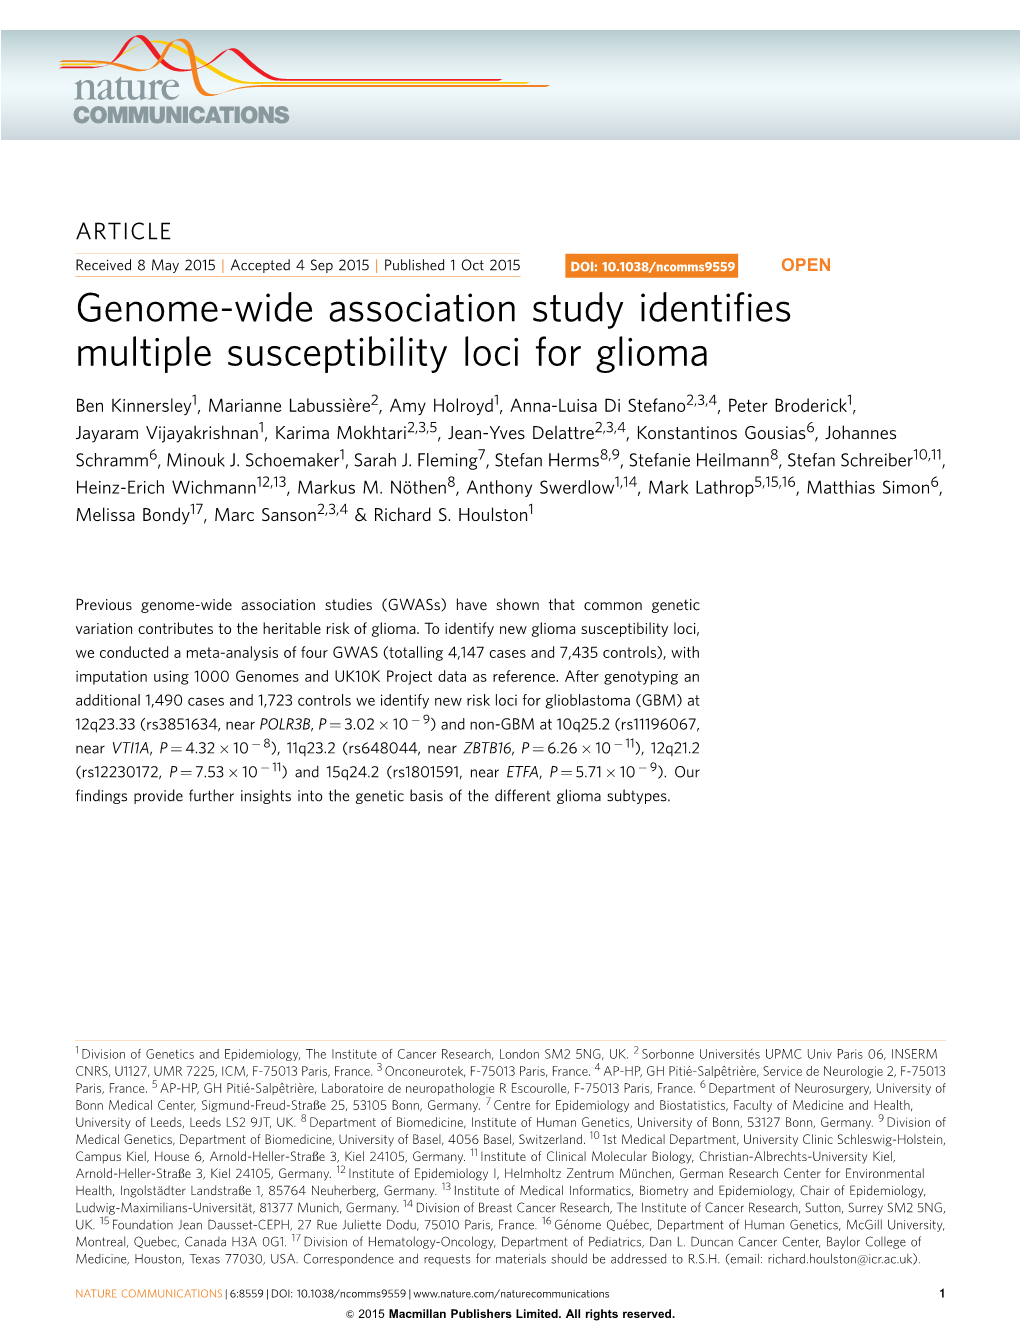 Genome-Wide Association Study Identifies Multiple Susceptibility Loci